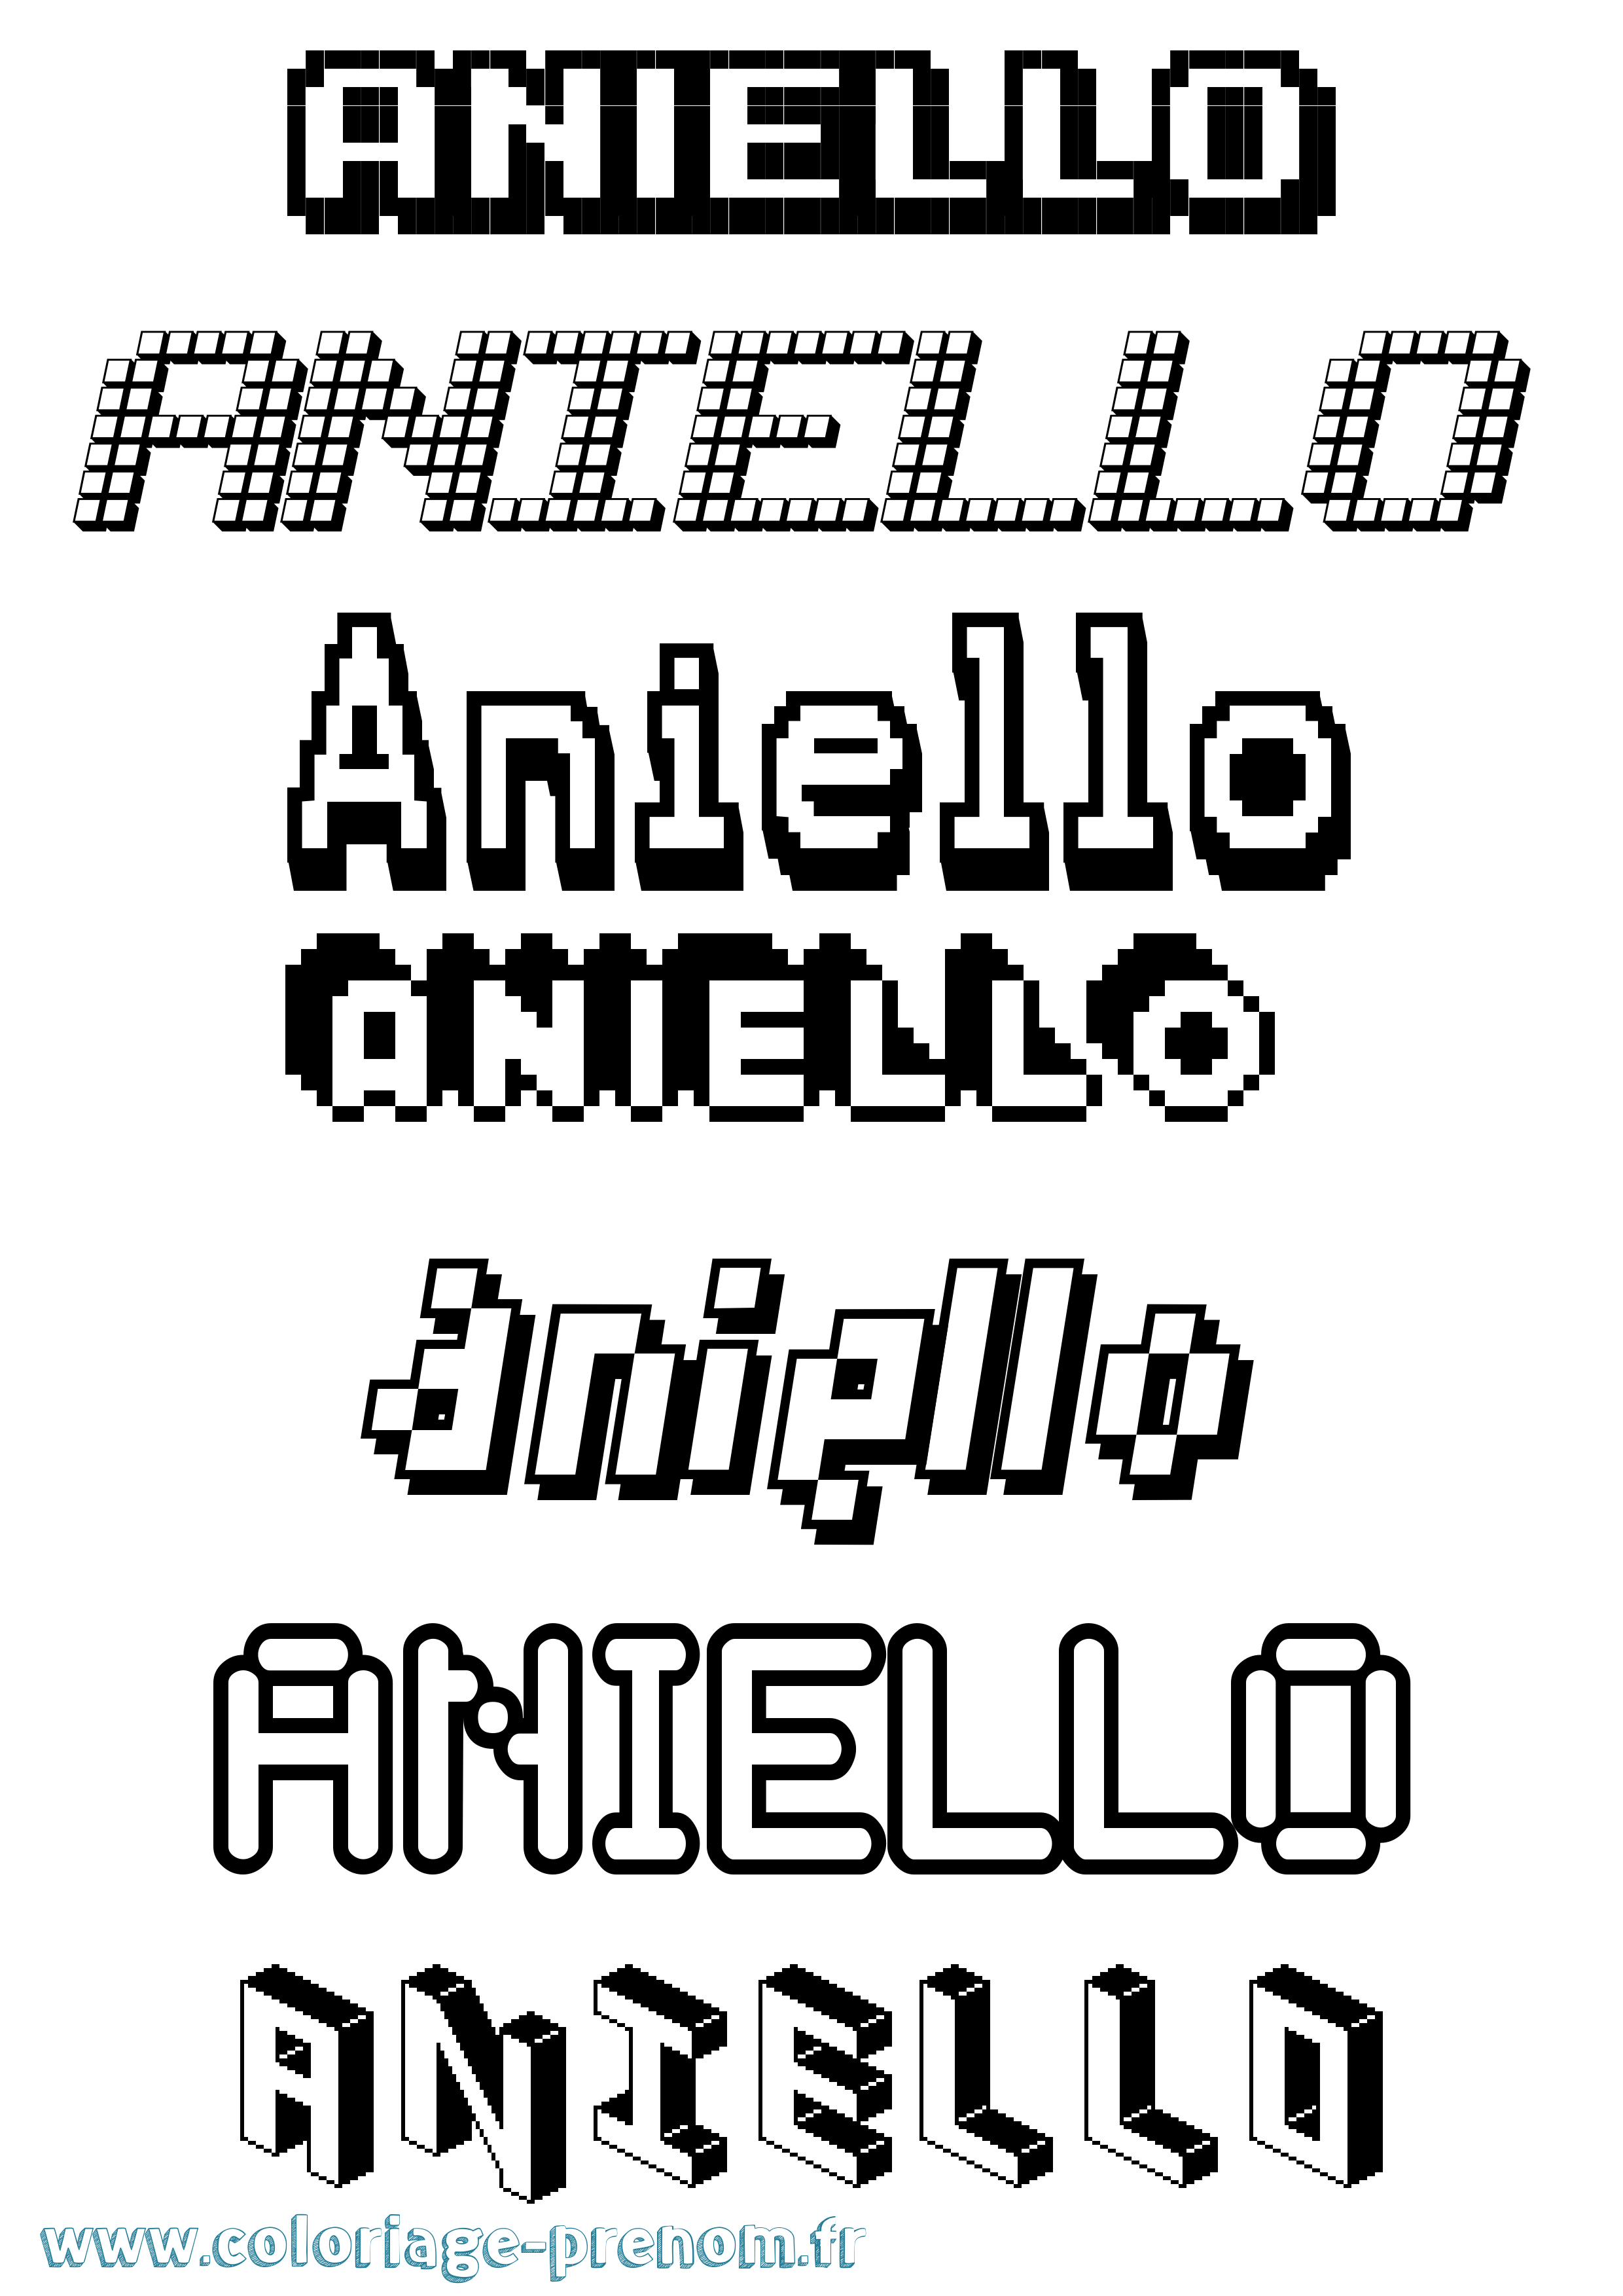 Coloriage prénom Aniello Pixel